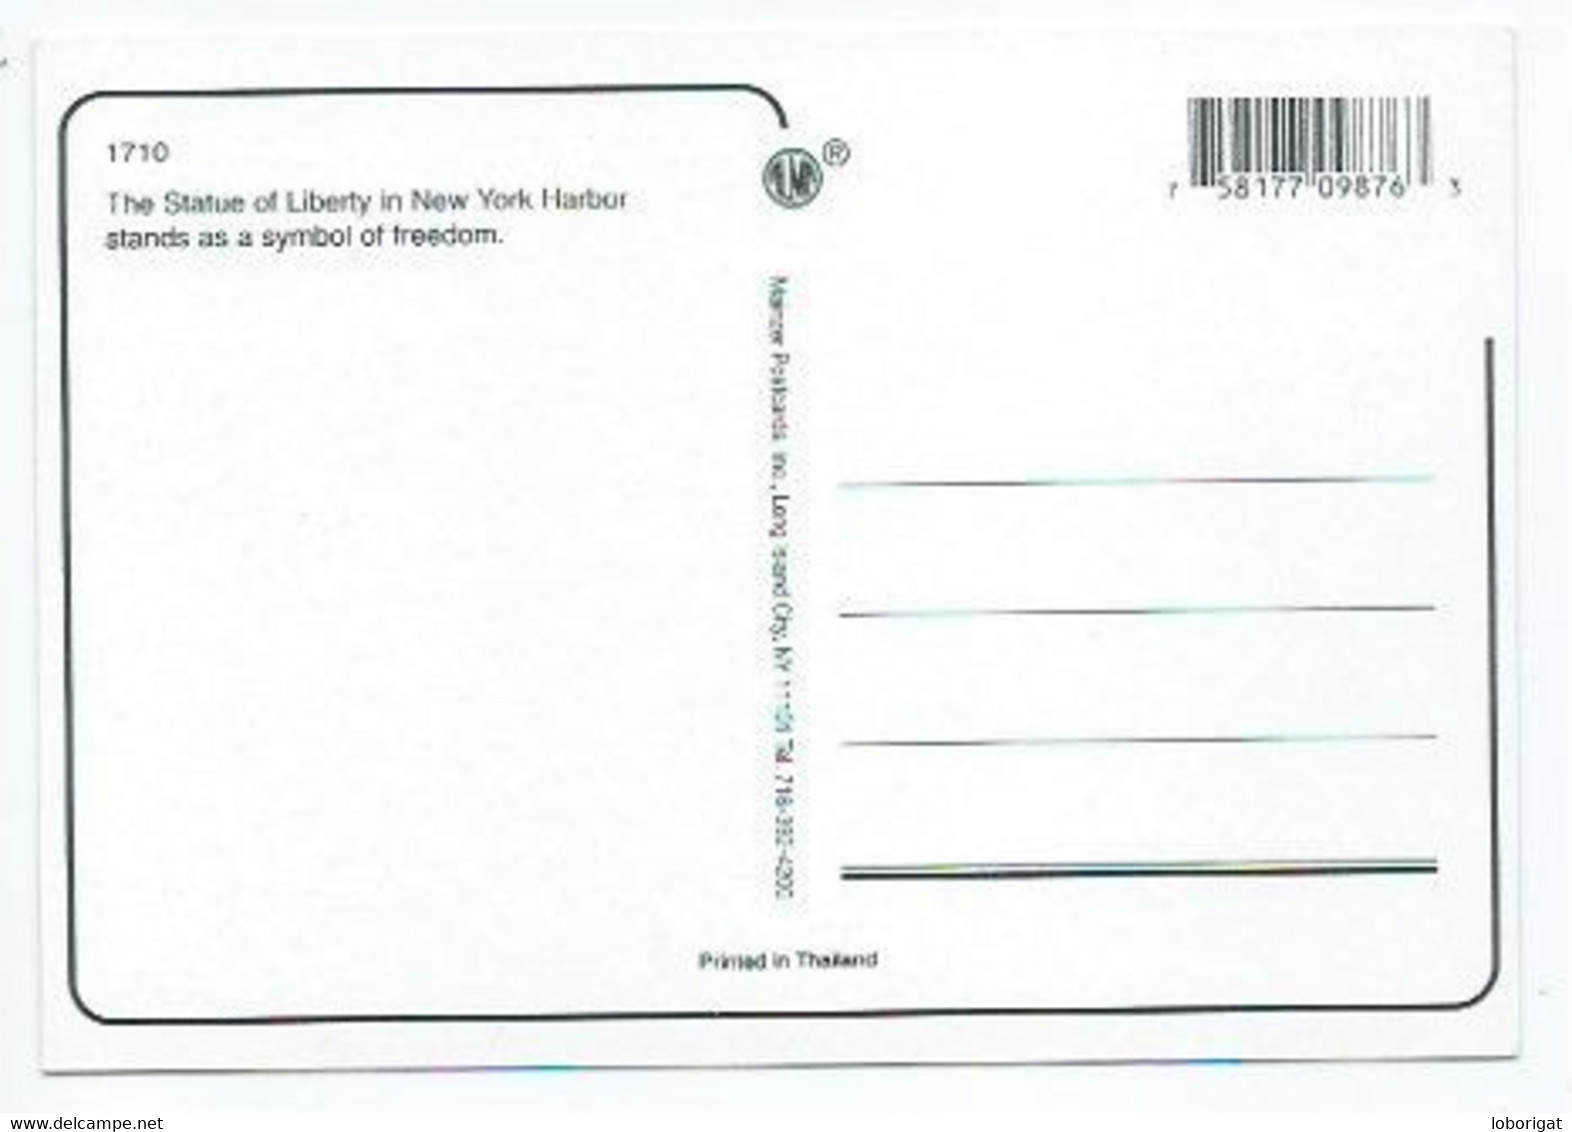 STATUE OF LIBERTY - LIBERTY ISLAND OF NEW YORK BAY.- NEW YORK CITY.- ( U.S.A. ) - Ellis Island